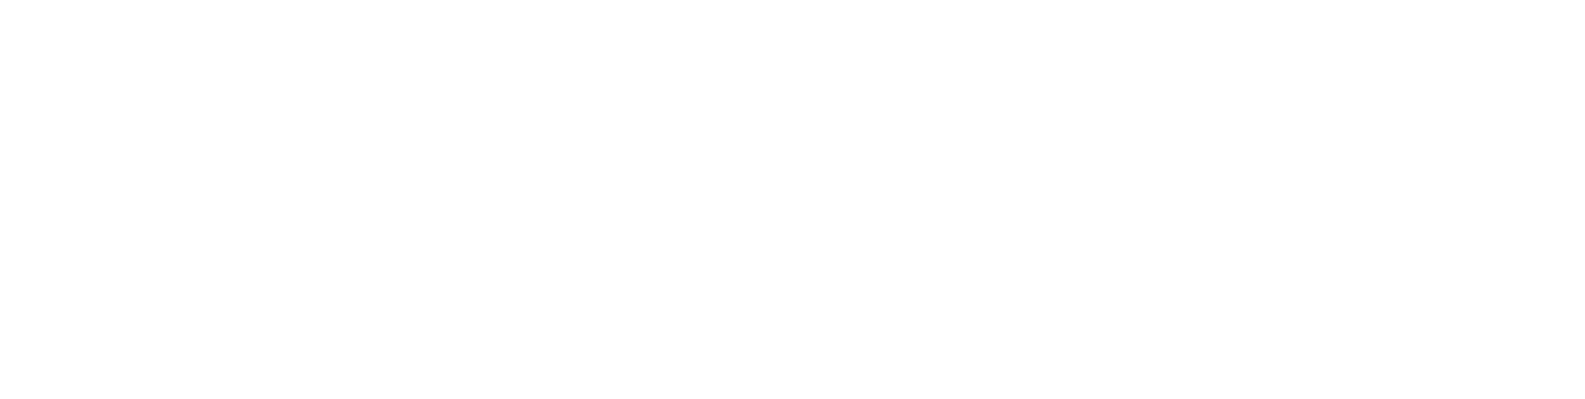 Bank of Jiangsu Logo groß für dunkle Hintergründe (transparentes PNG)